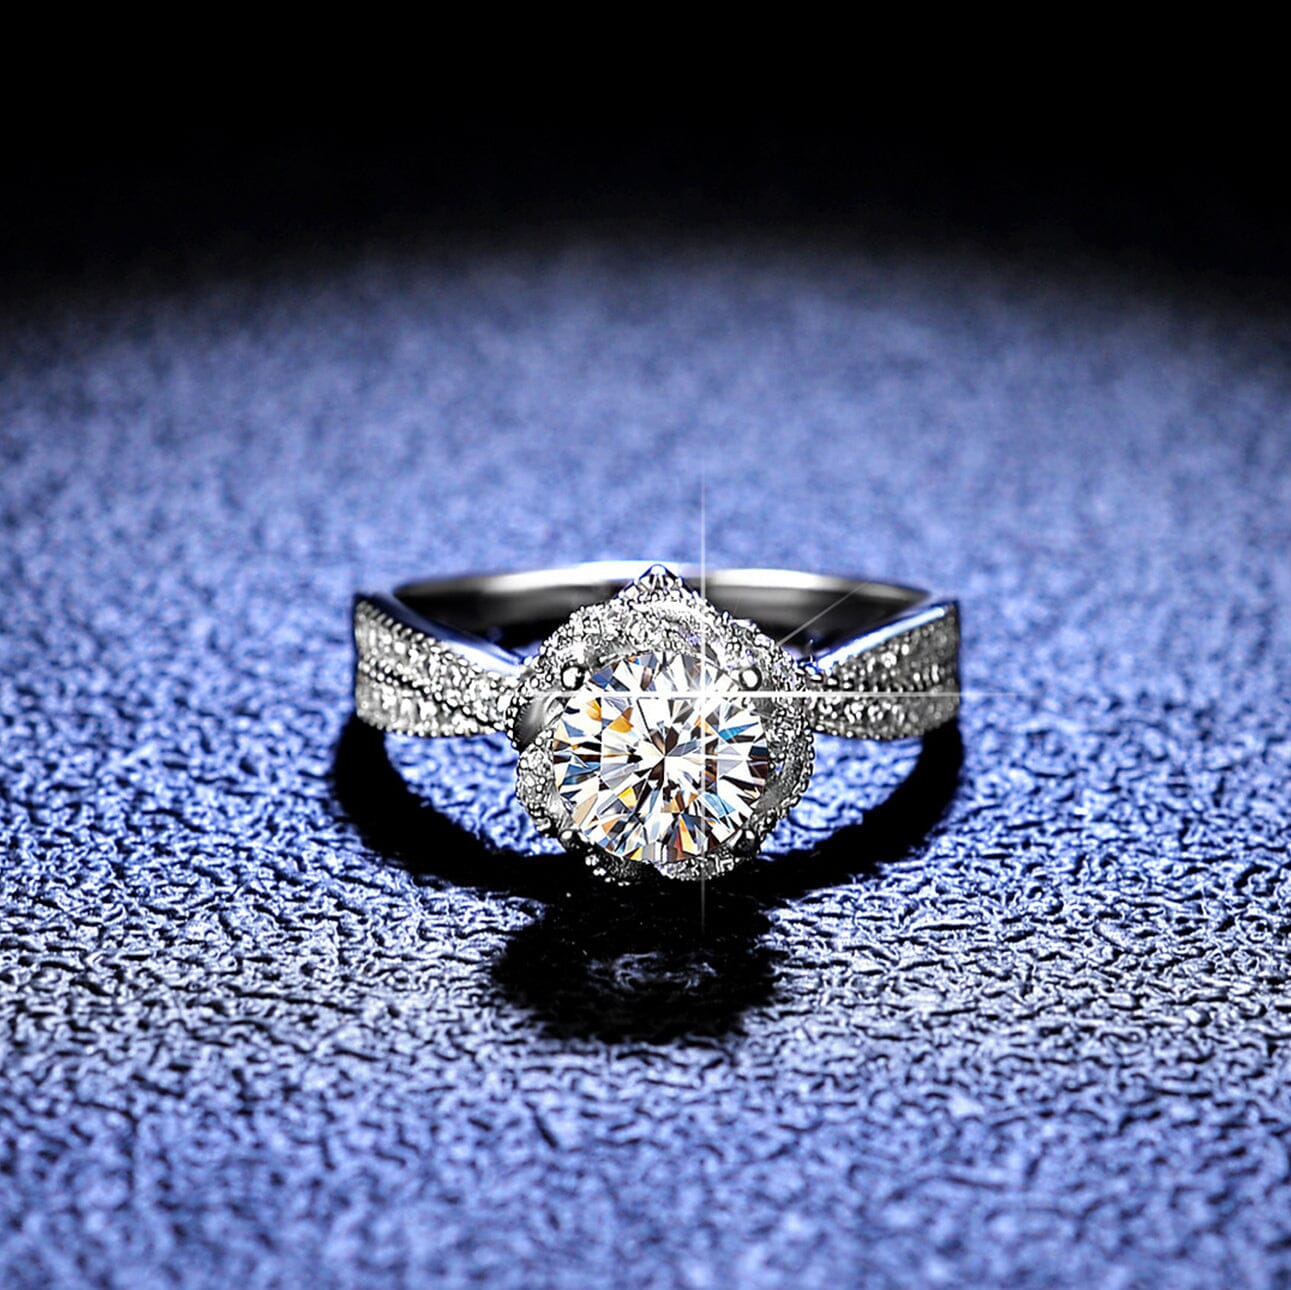 Stunning Beautiful Diamond Ring - 925 Sterling SilverRing